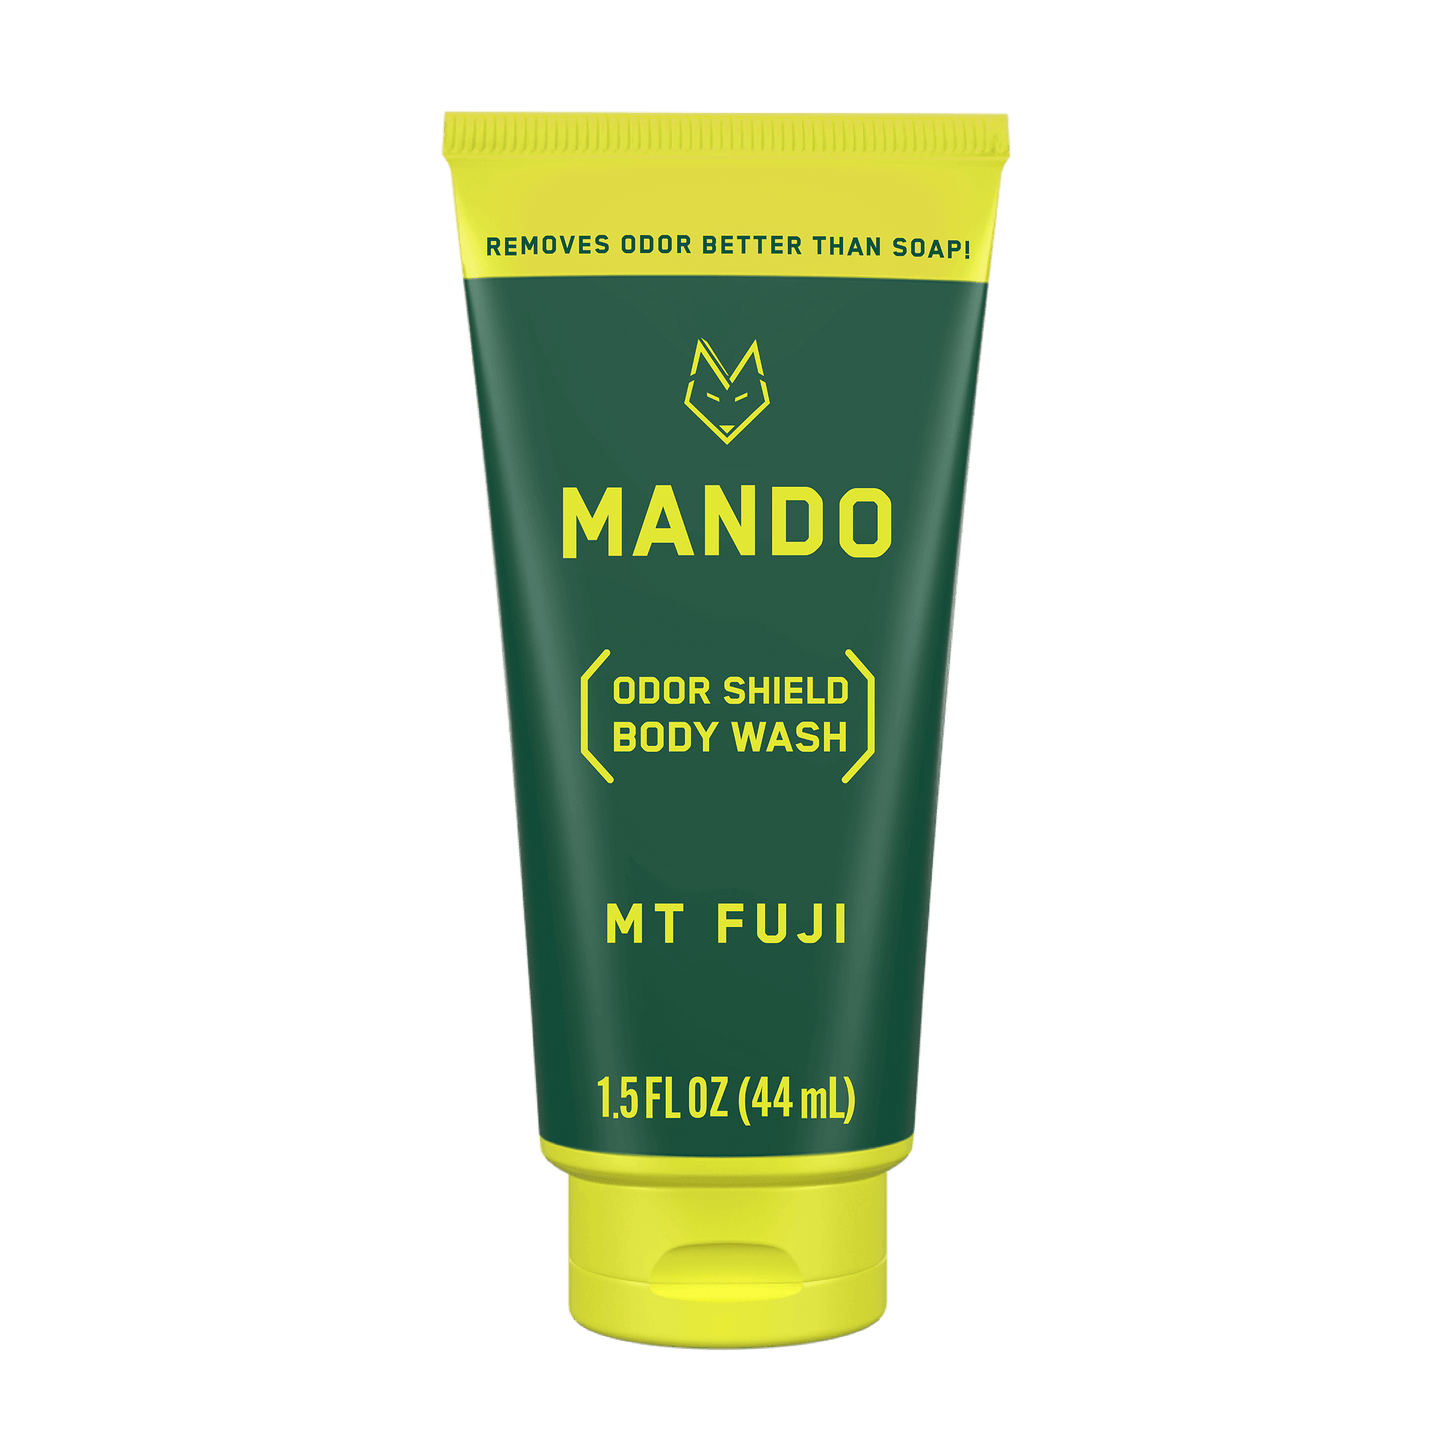 yellow green tube of Mando mini body wash in mt fuji scent against transparent background 